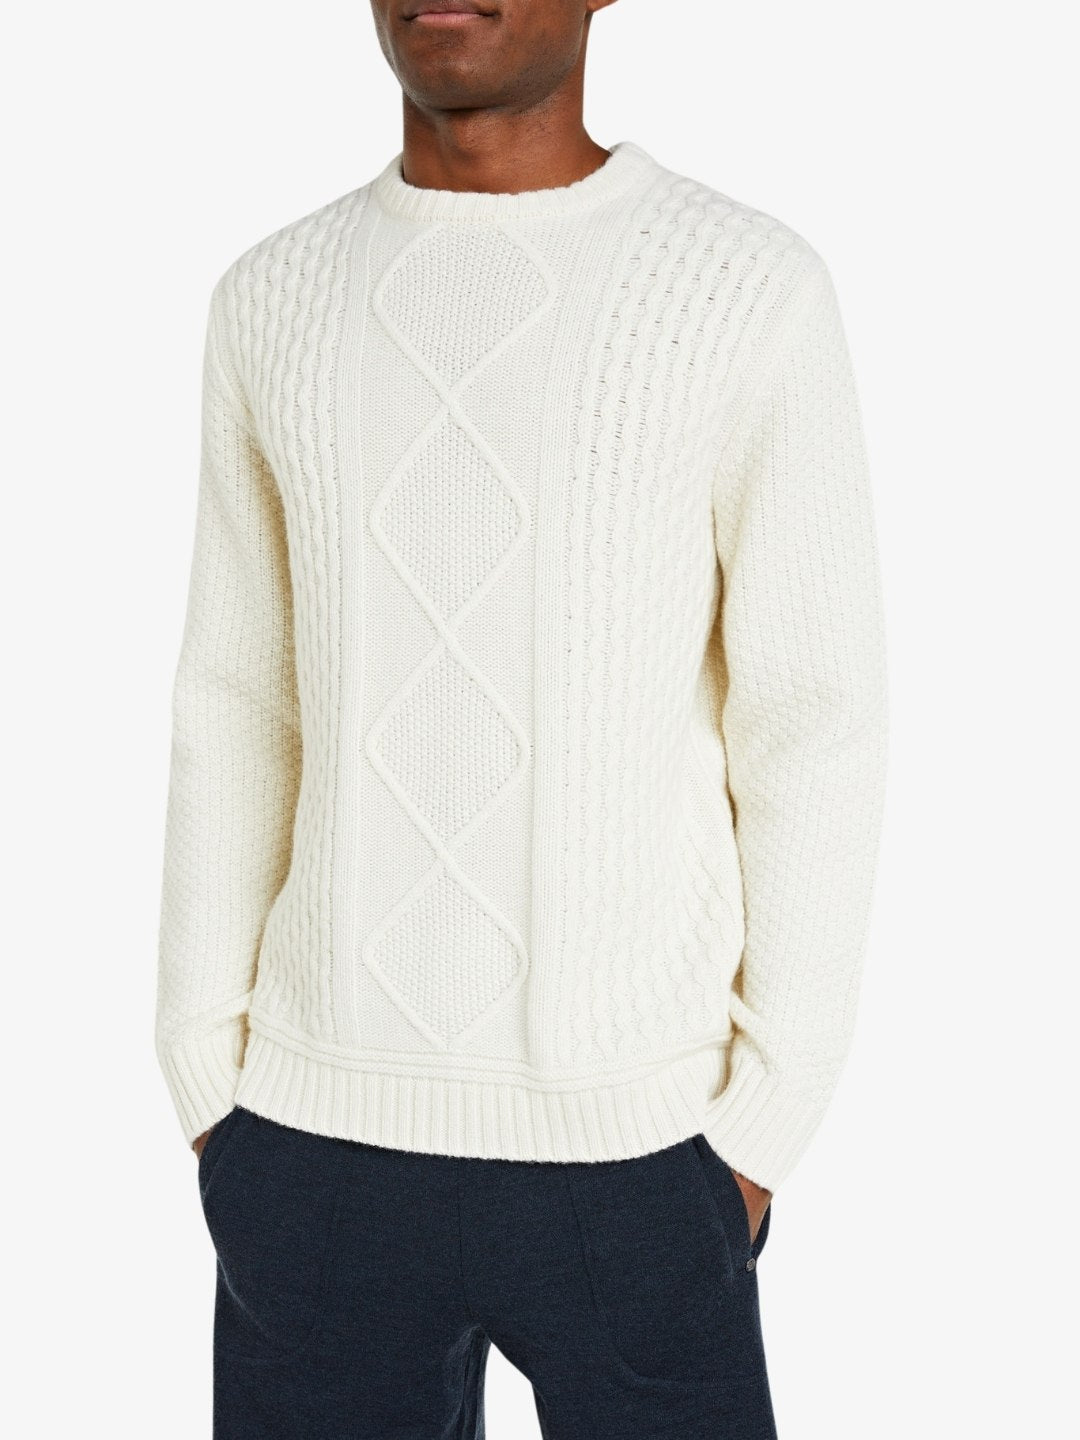 Kvitholmen Sweater Men White